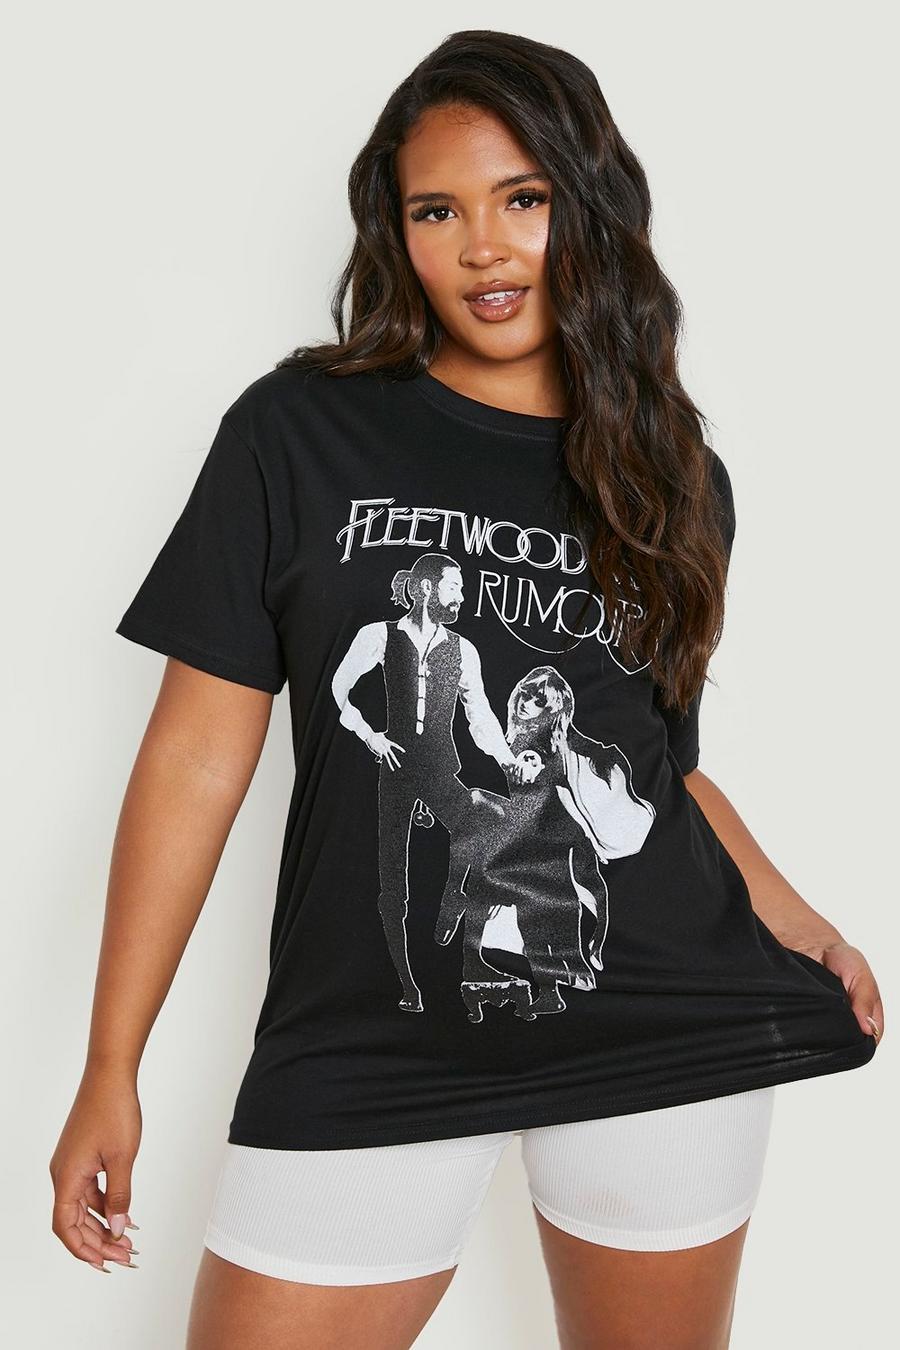 Black Plus Fleetwood Mac Rumours Band T-shirt